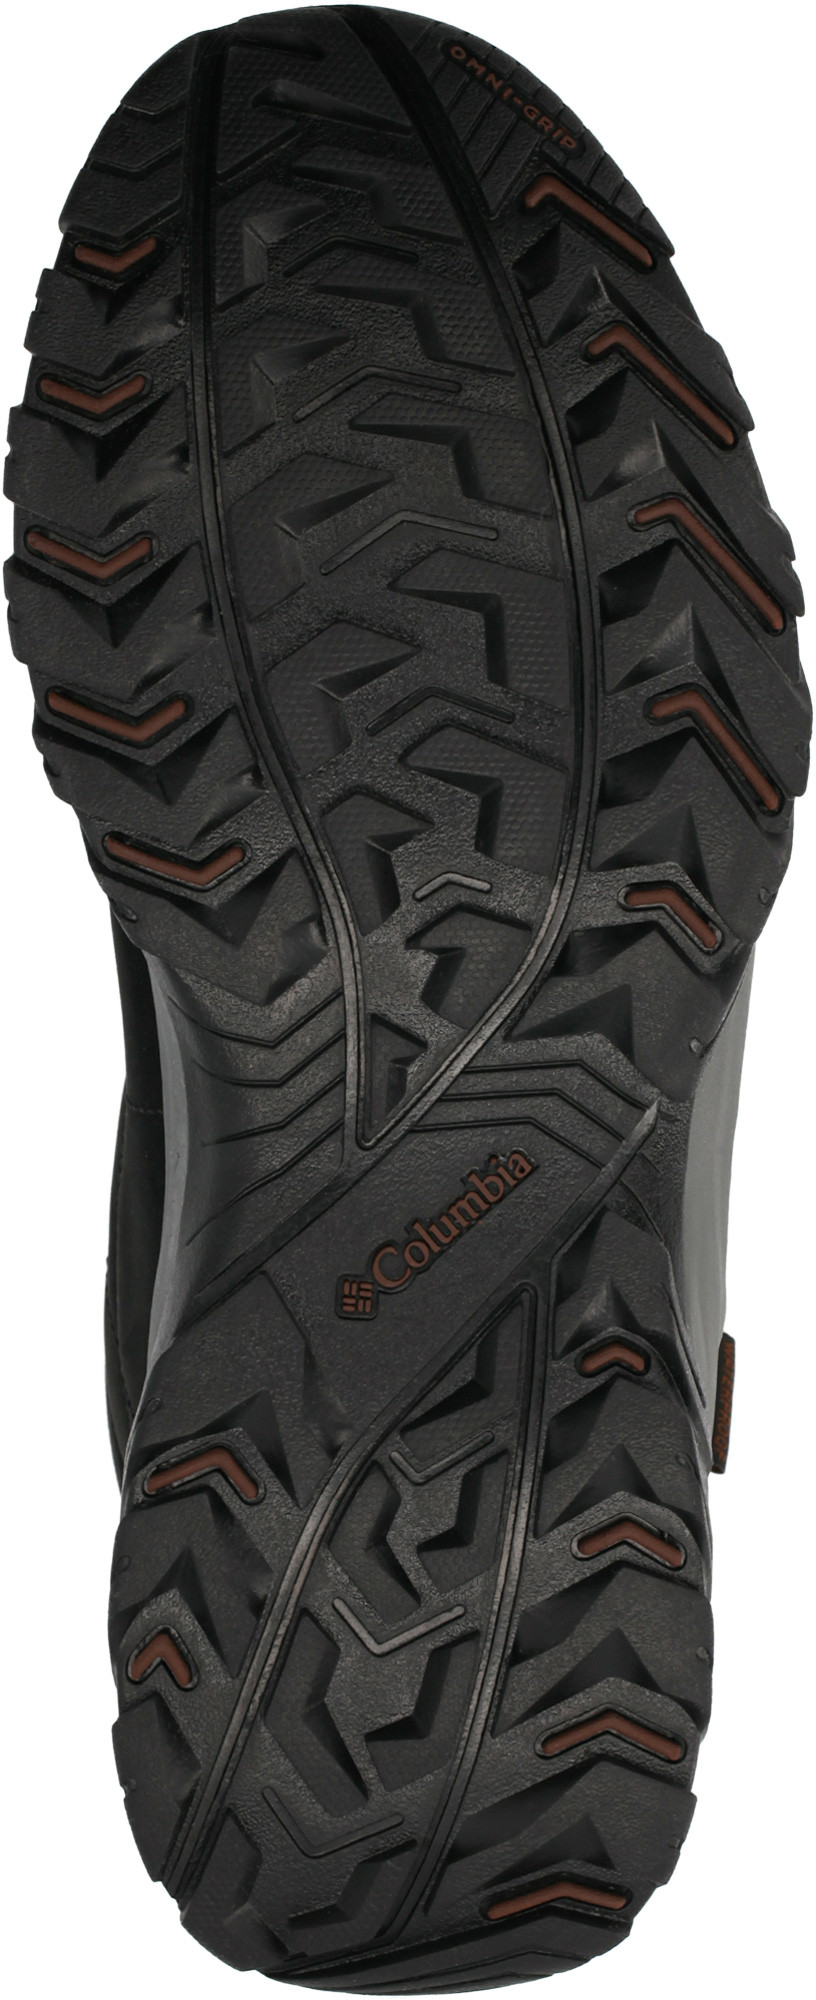 Ботинки мужские Columbia Crestwood™ Venture Mid Waterproof